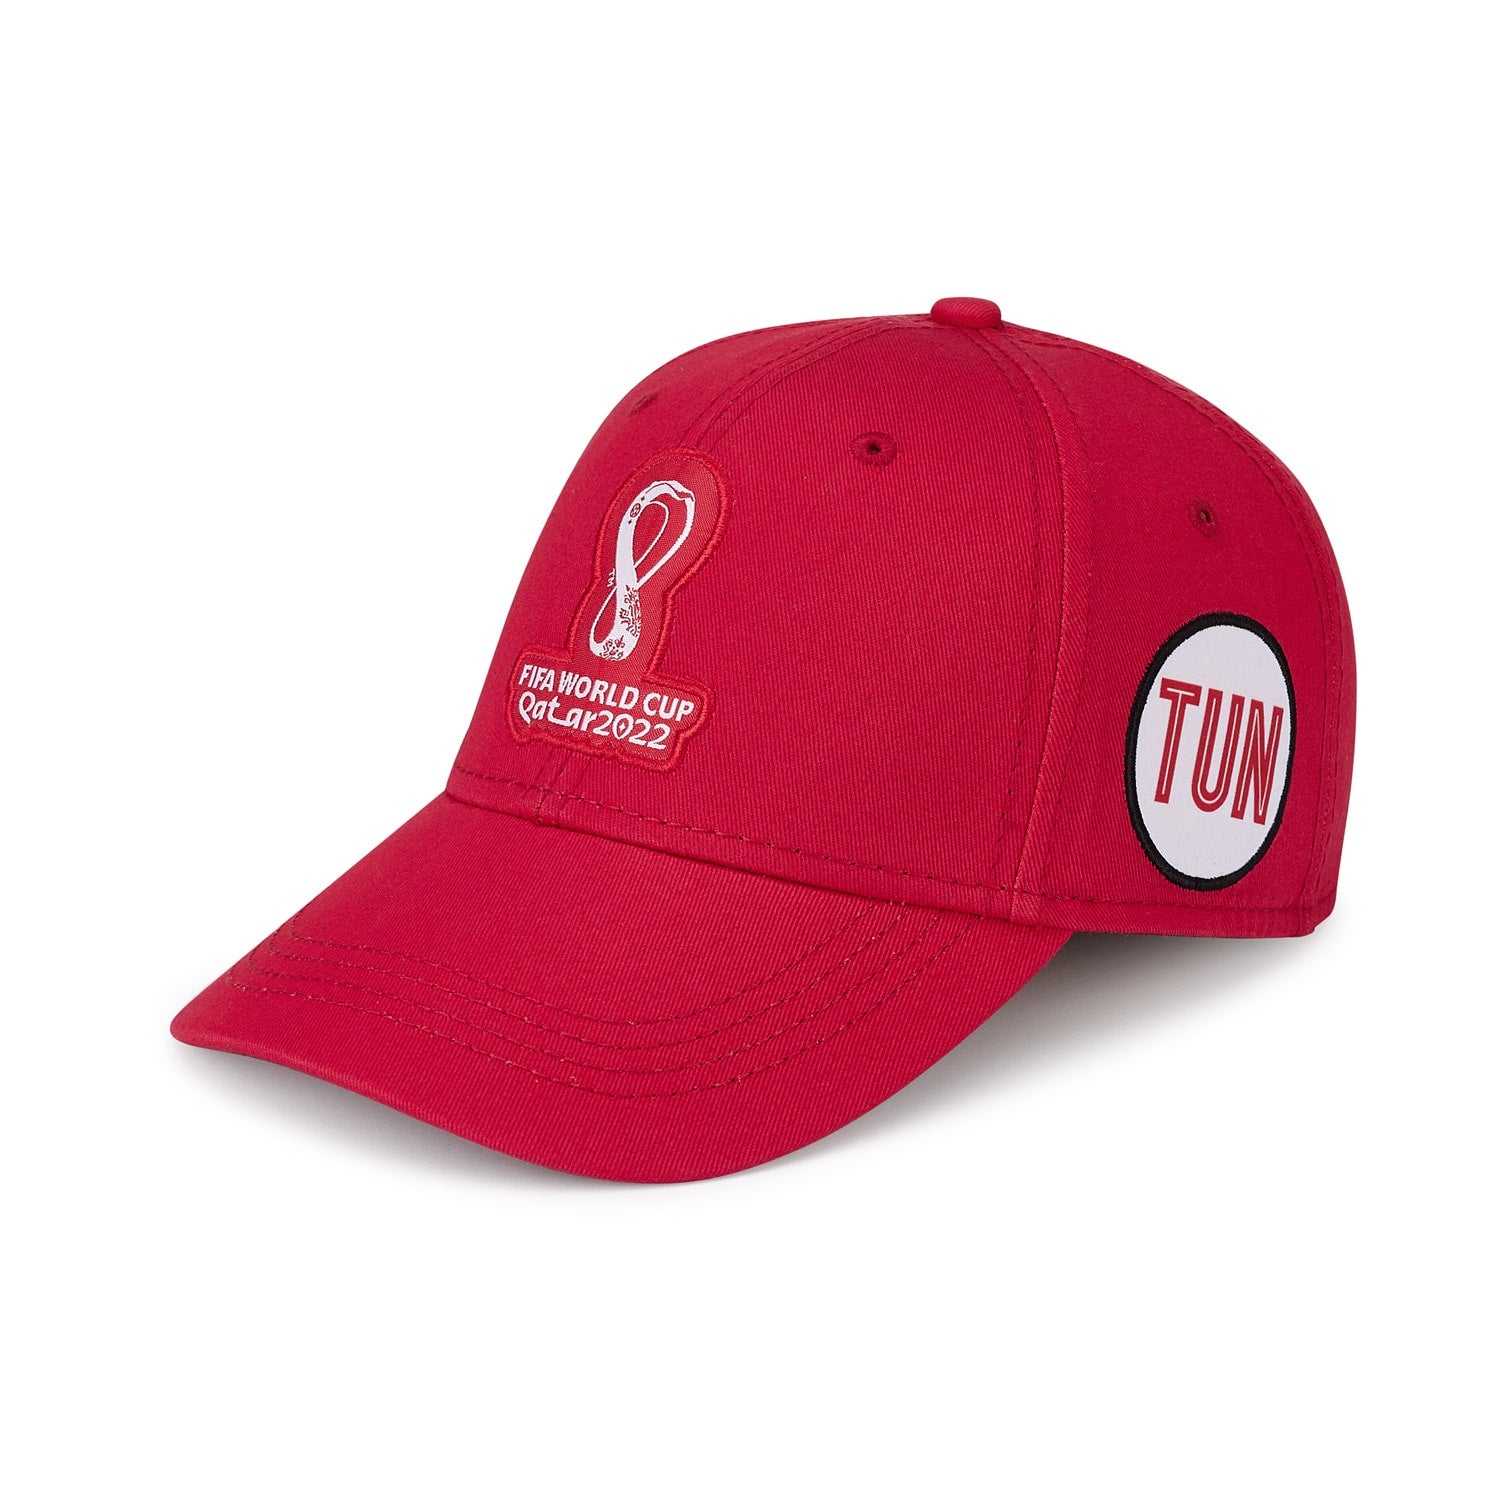 2022 World Cup Tunisia Red Cap - Mens